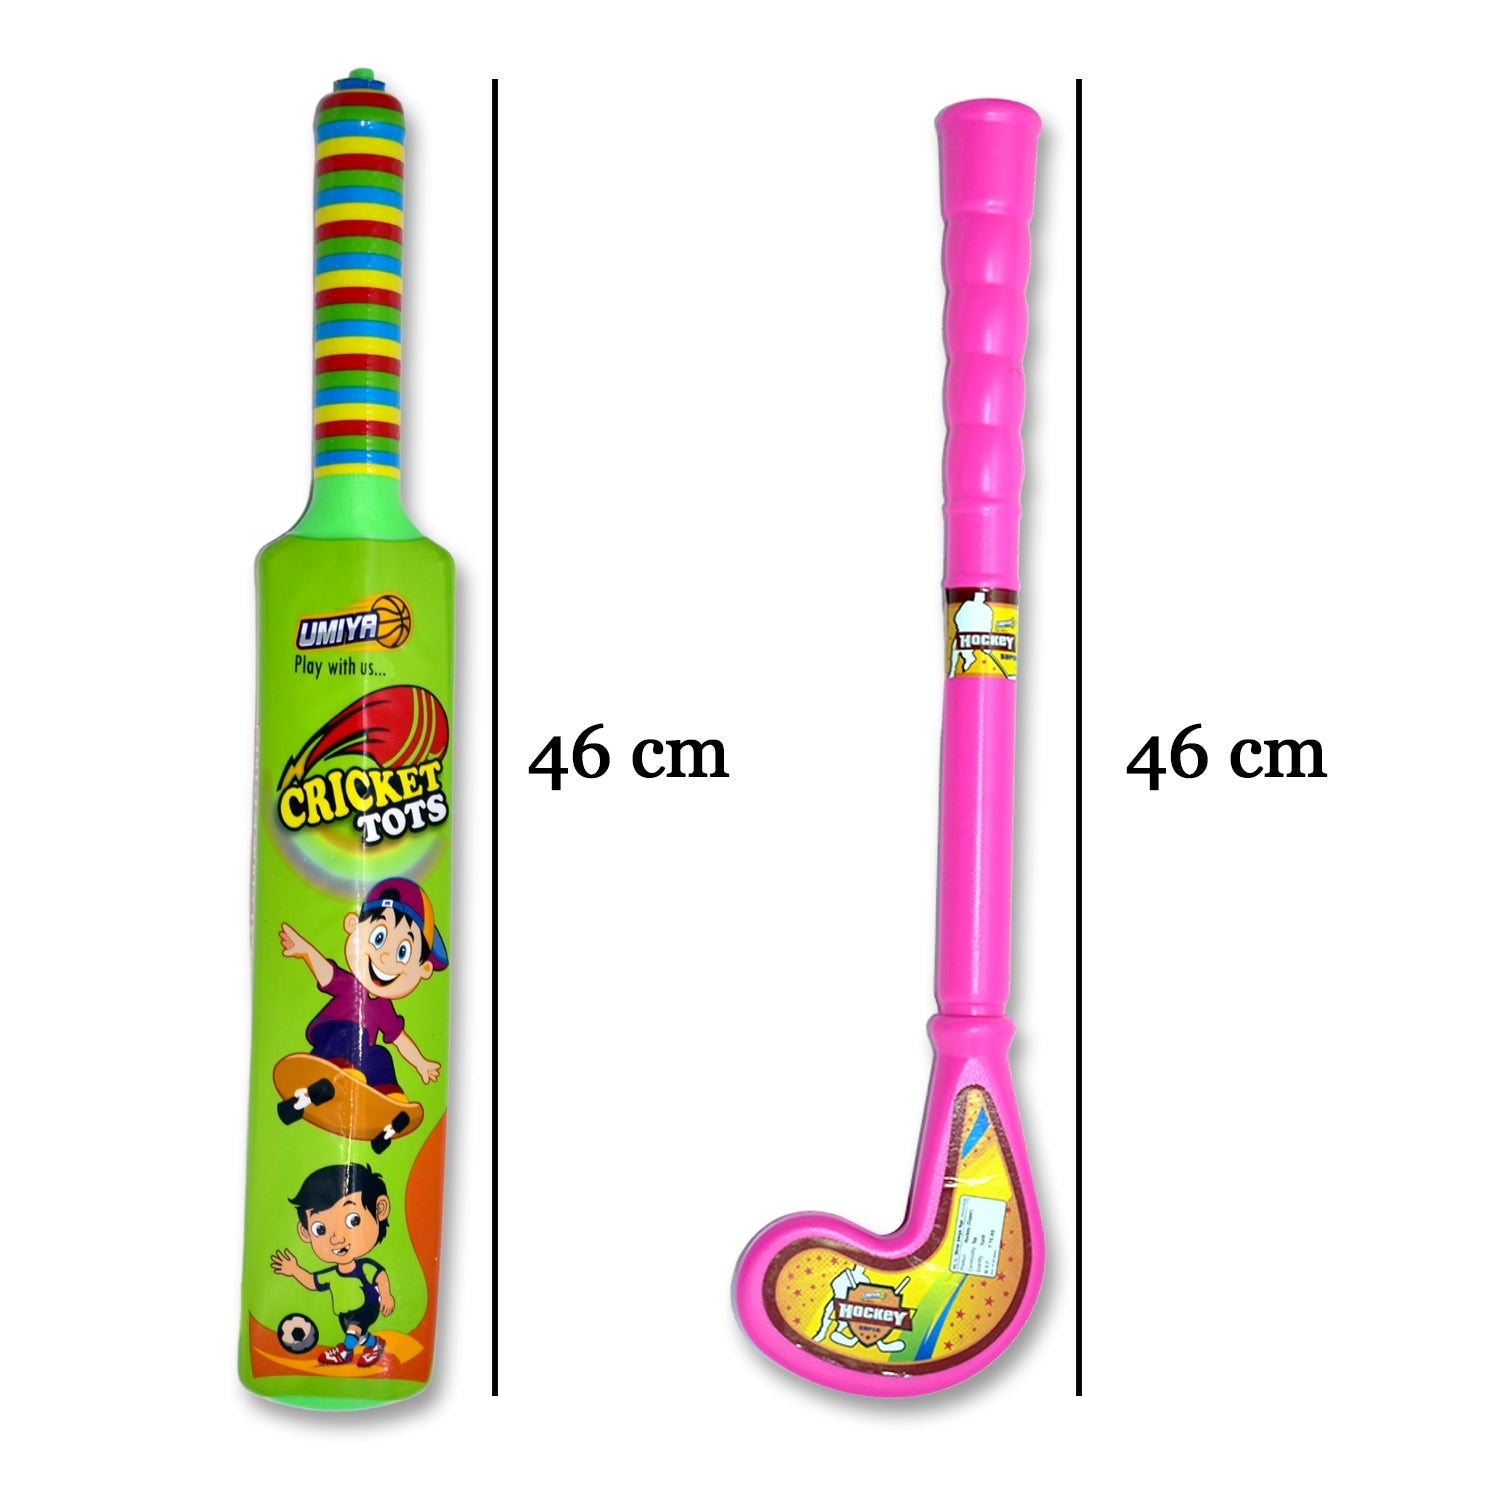 8002 Combo of Light Weight Plastic Bat, Ball & Hockey for Kids, Boys, Indoor, Outdoor Play Dukandaily